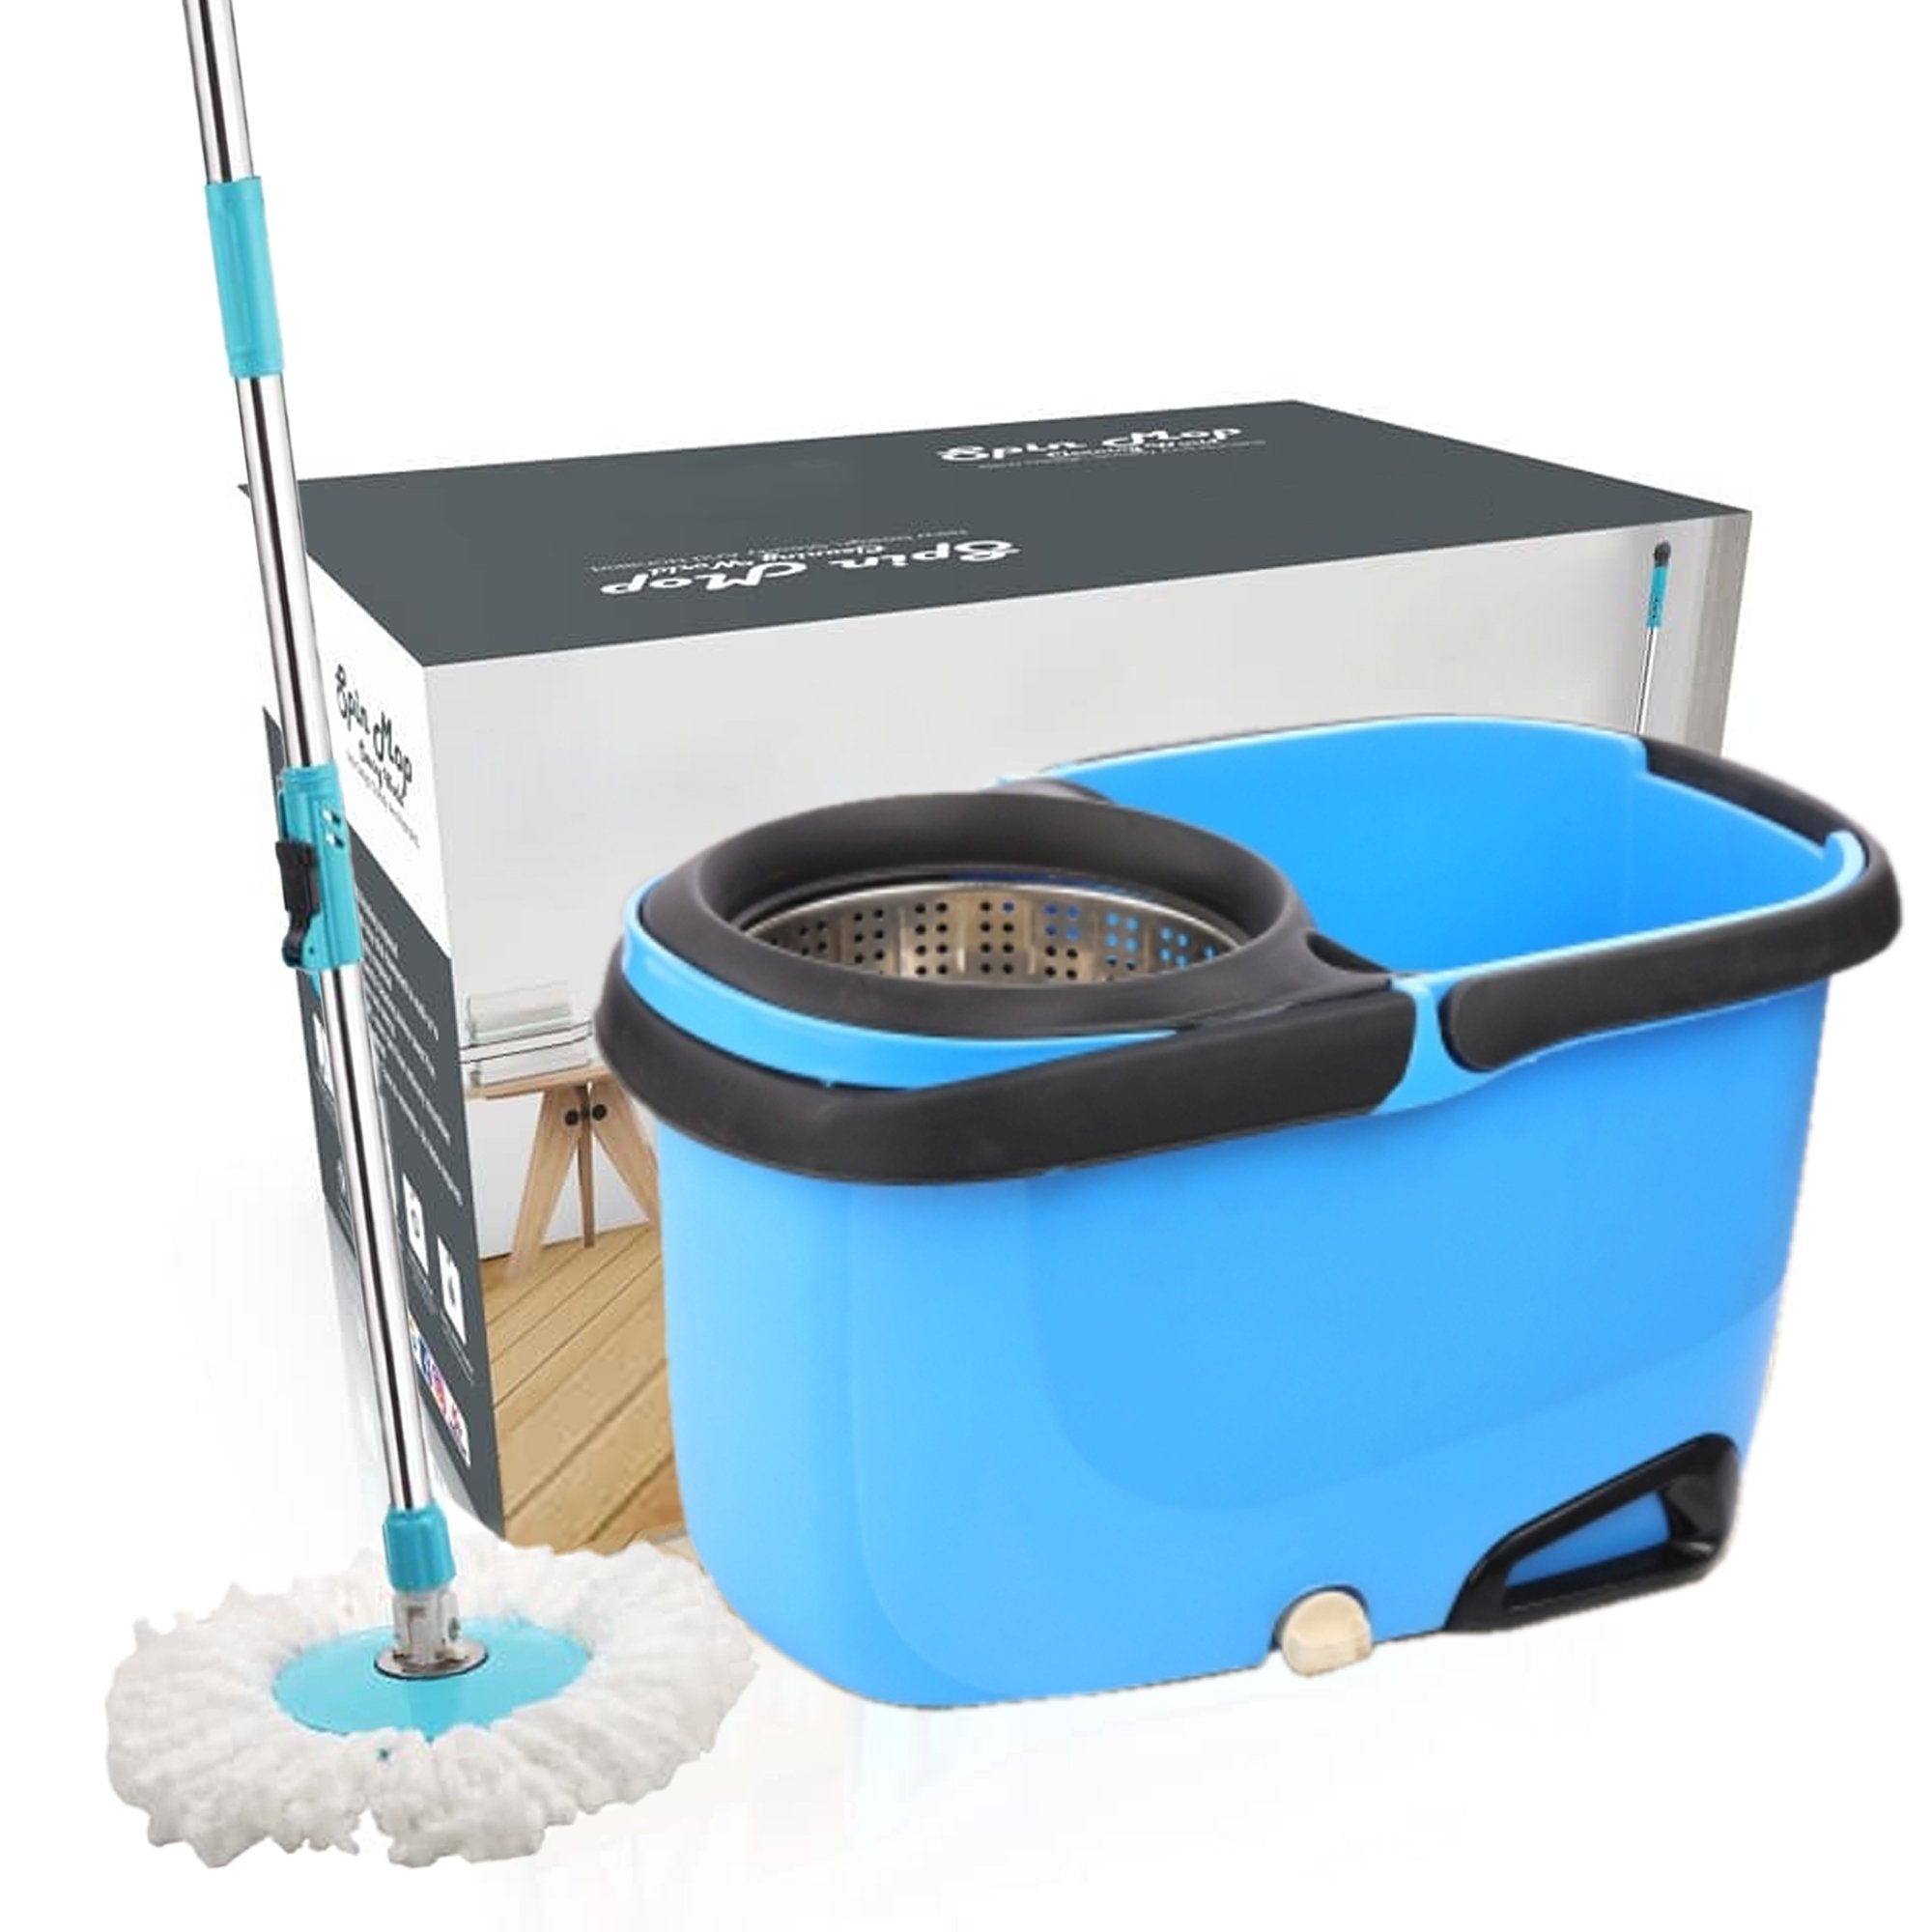 1159 heavy duty microfiber spin mop with plastic bucket multicolour